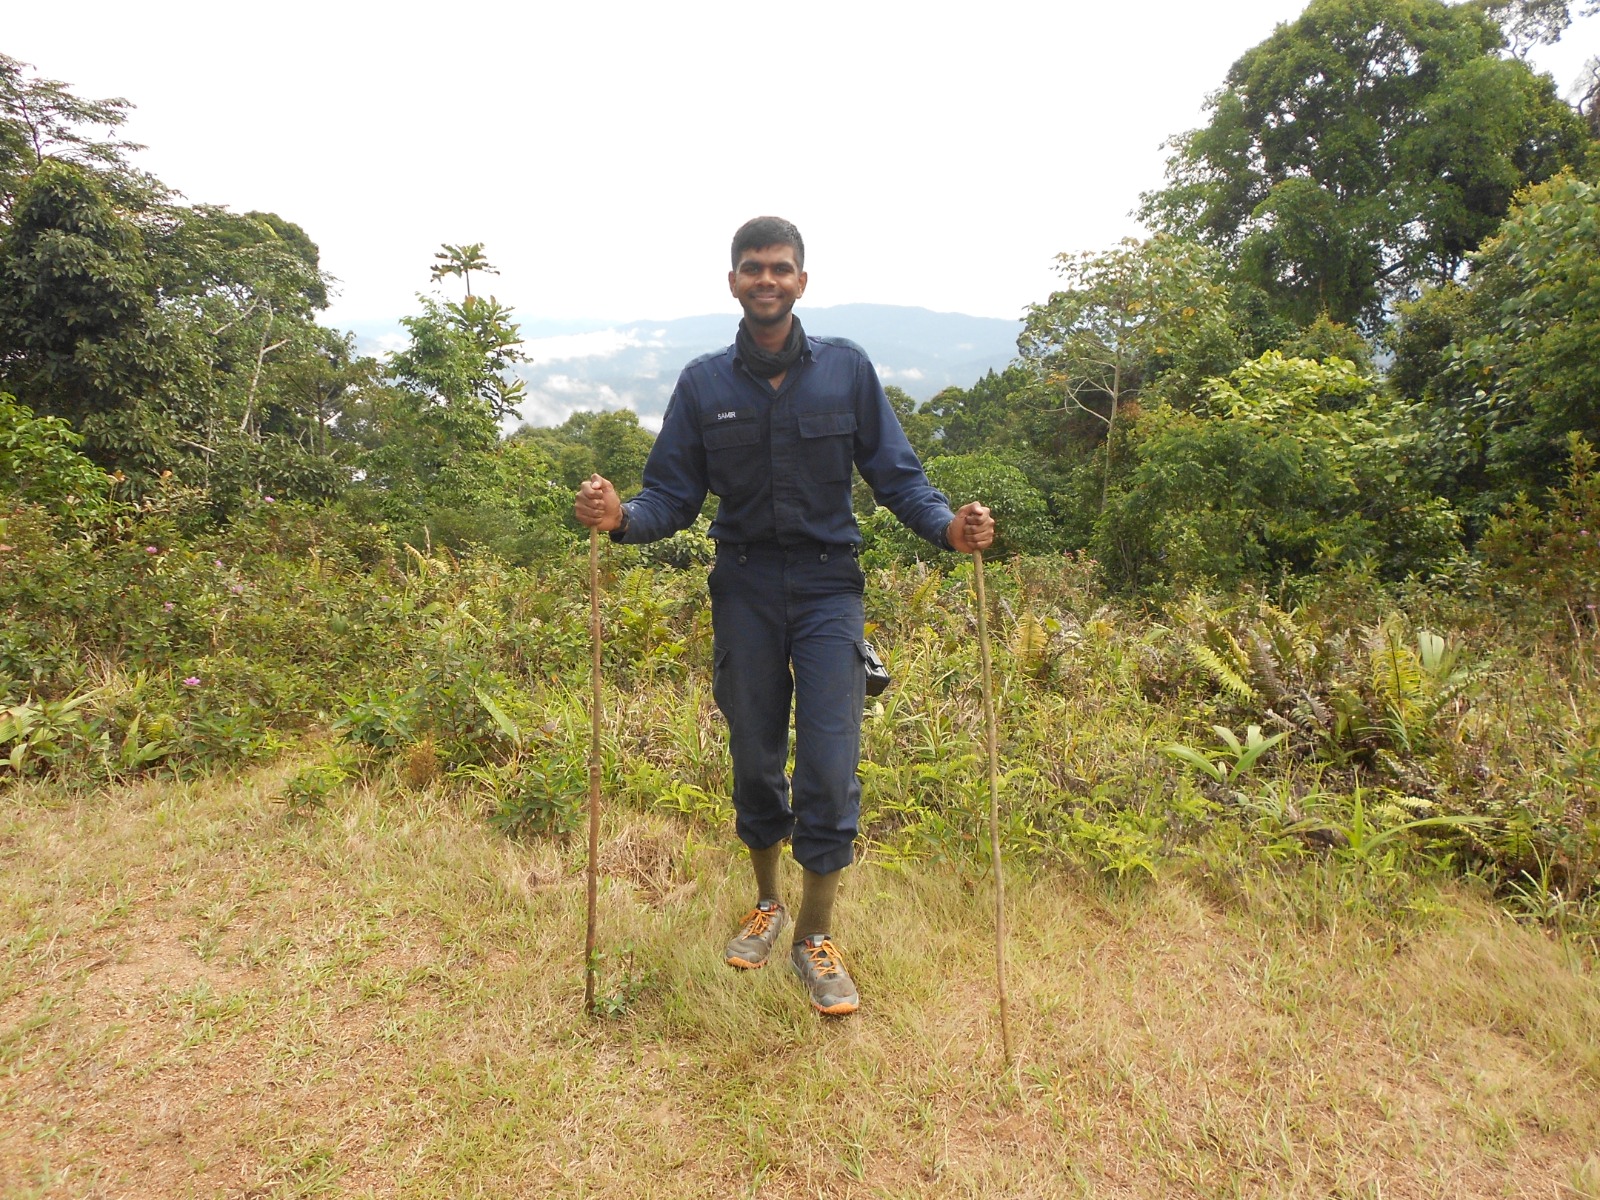 LTA Samir after he injured his left ankle while descending the hill